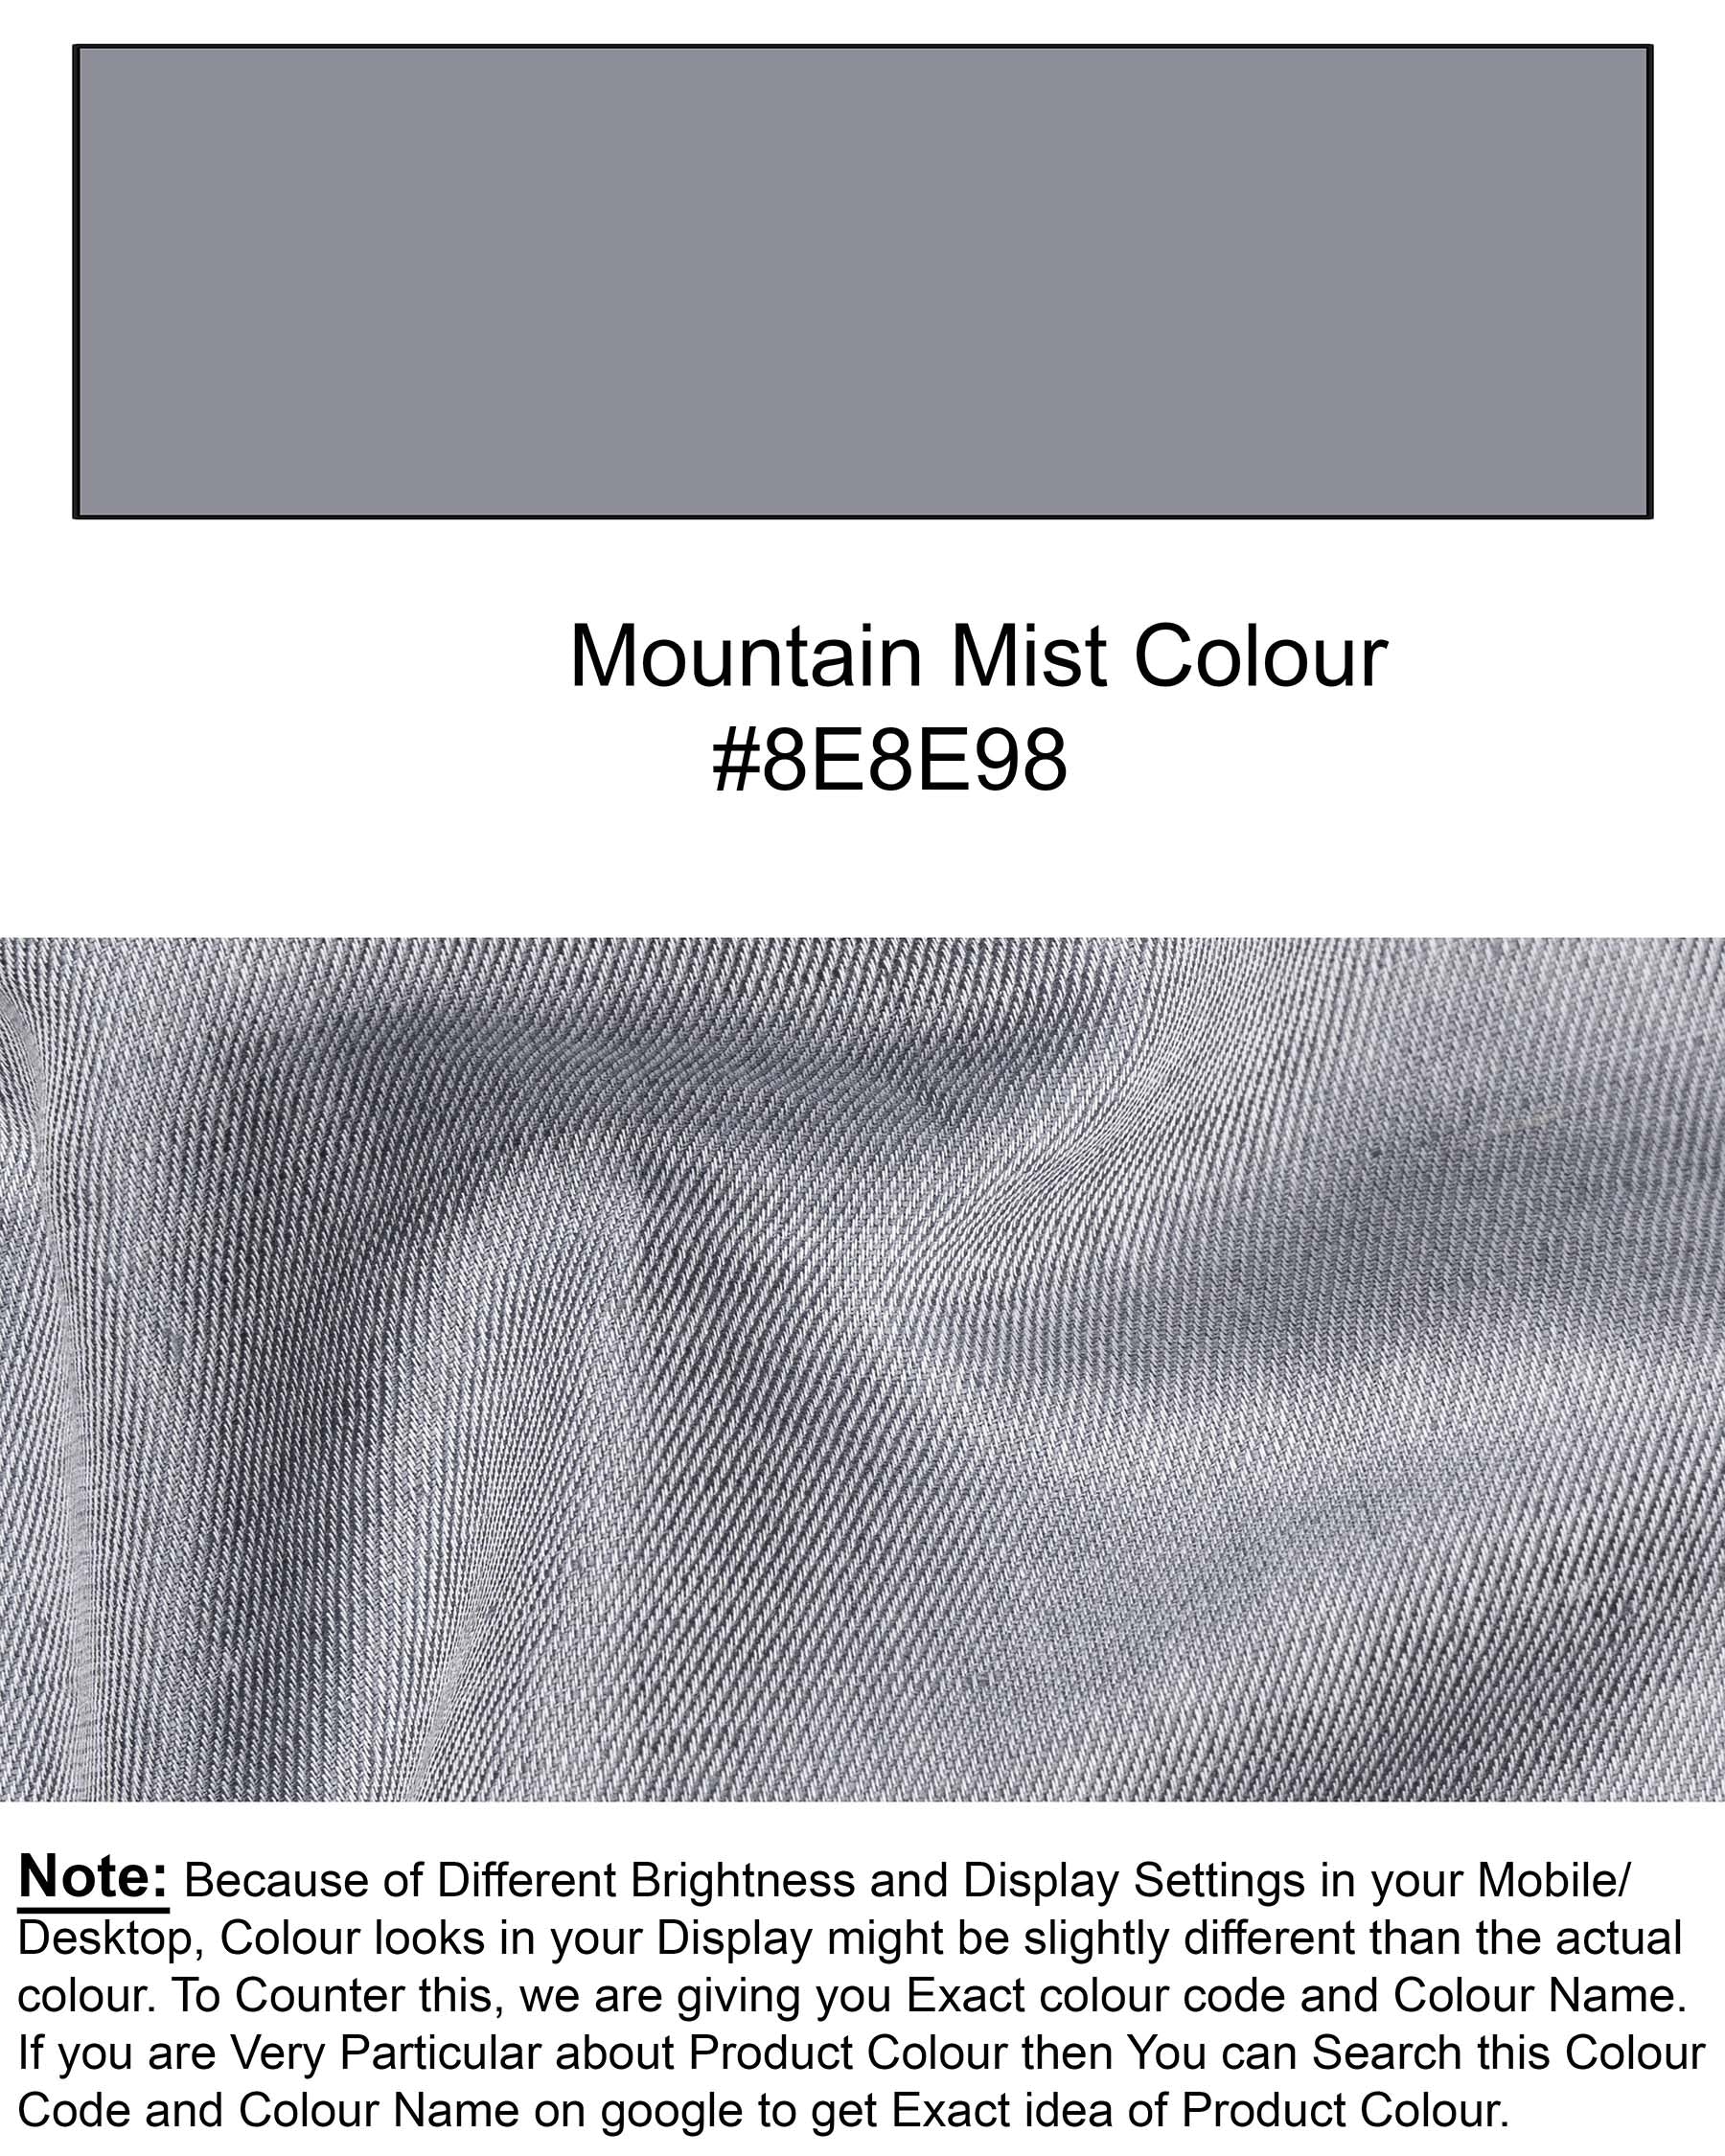 Mountain Mist Grey Luxurious Linen Shirt 6136-CC-38, 6136-CC-H-38, 6136-CC-39, 6136-CC-H-39, 6136-CC-40, 6136-CC-H-40, 6136-CC-42, 6136-CC-H-42, 6136-CC-44, 6136-CC-H-44, 6136-CC-46, 6136-CC-H-46, 6136-CC-48, 6136-CC-H-48, 6136-CC-50, 6136-CC-H-50, 6136-CC-52, 6136-CC-H-52